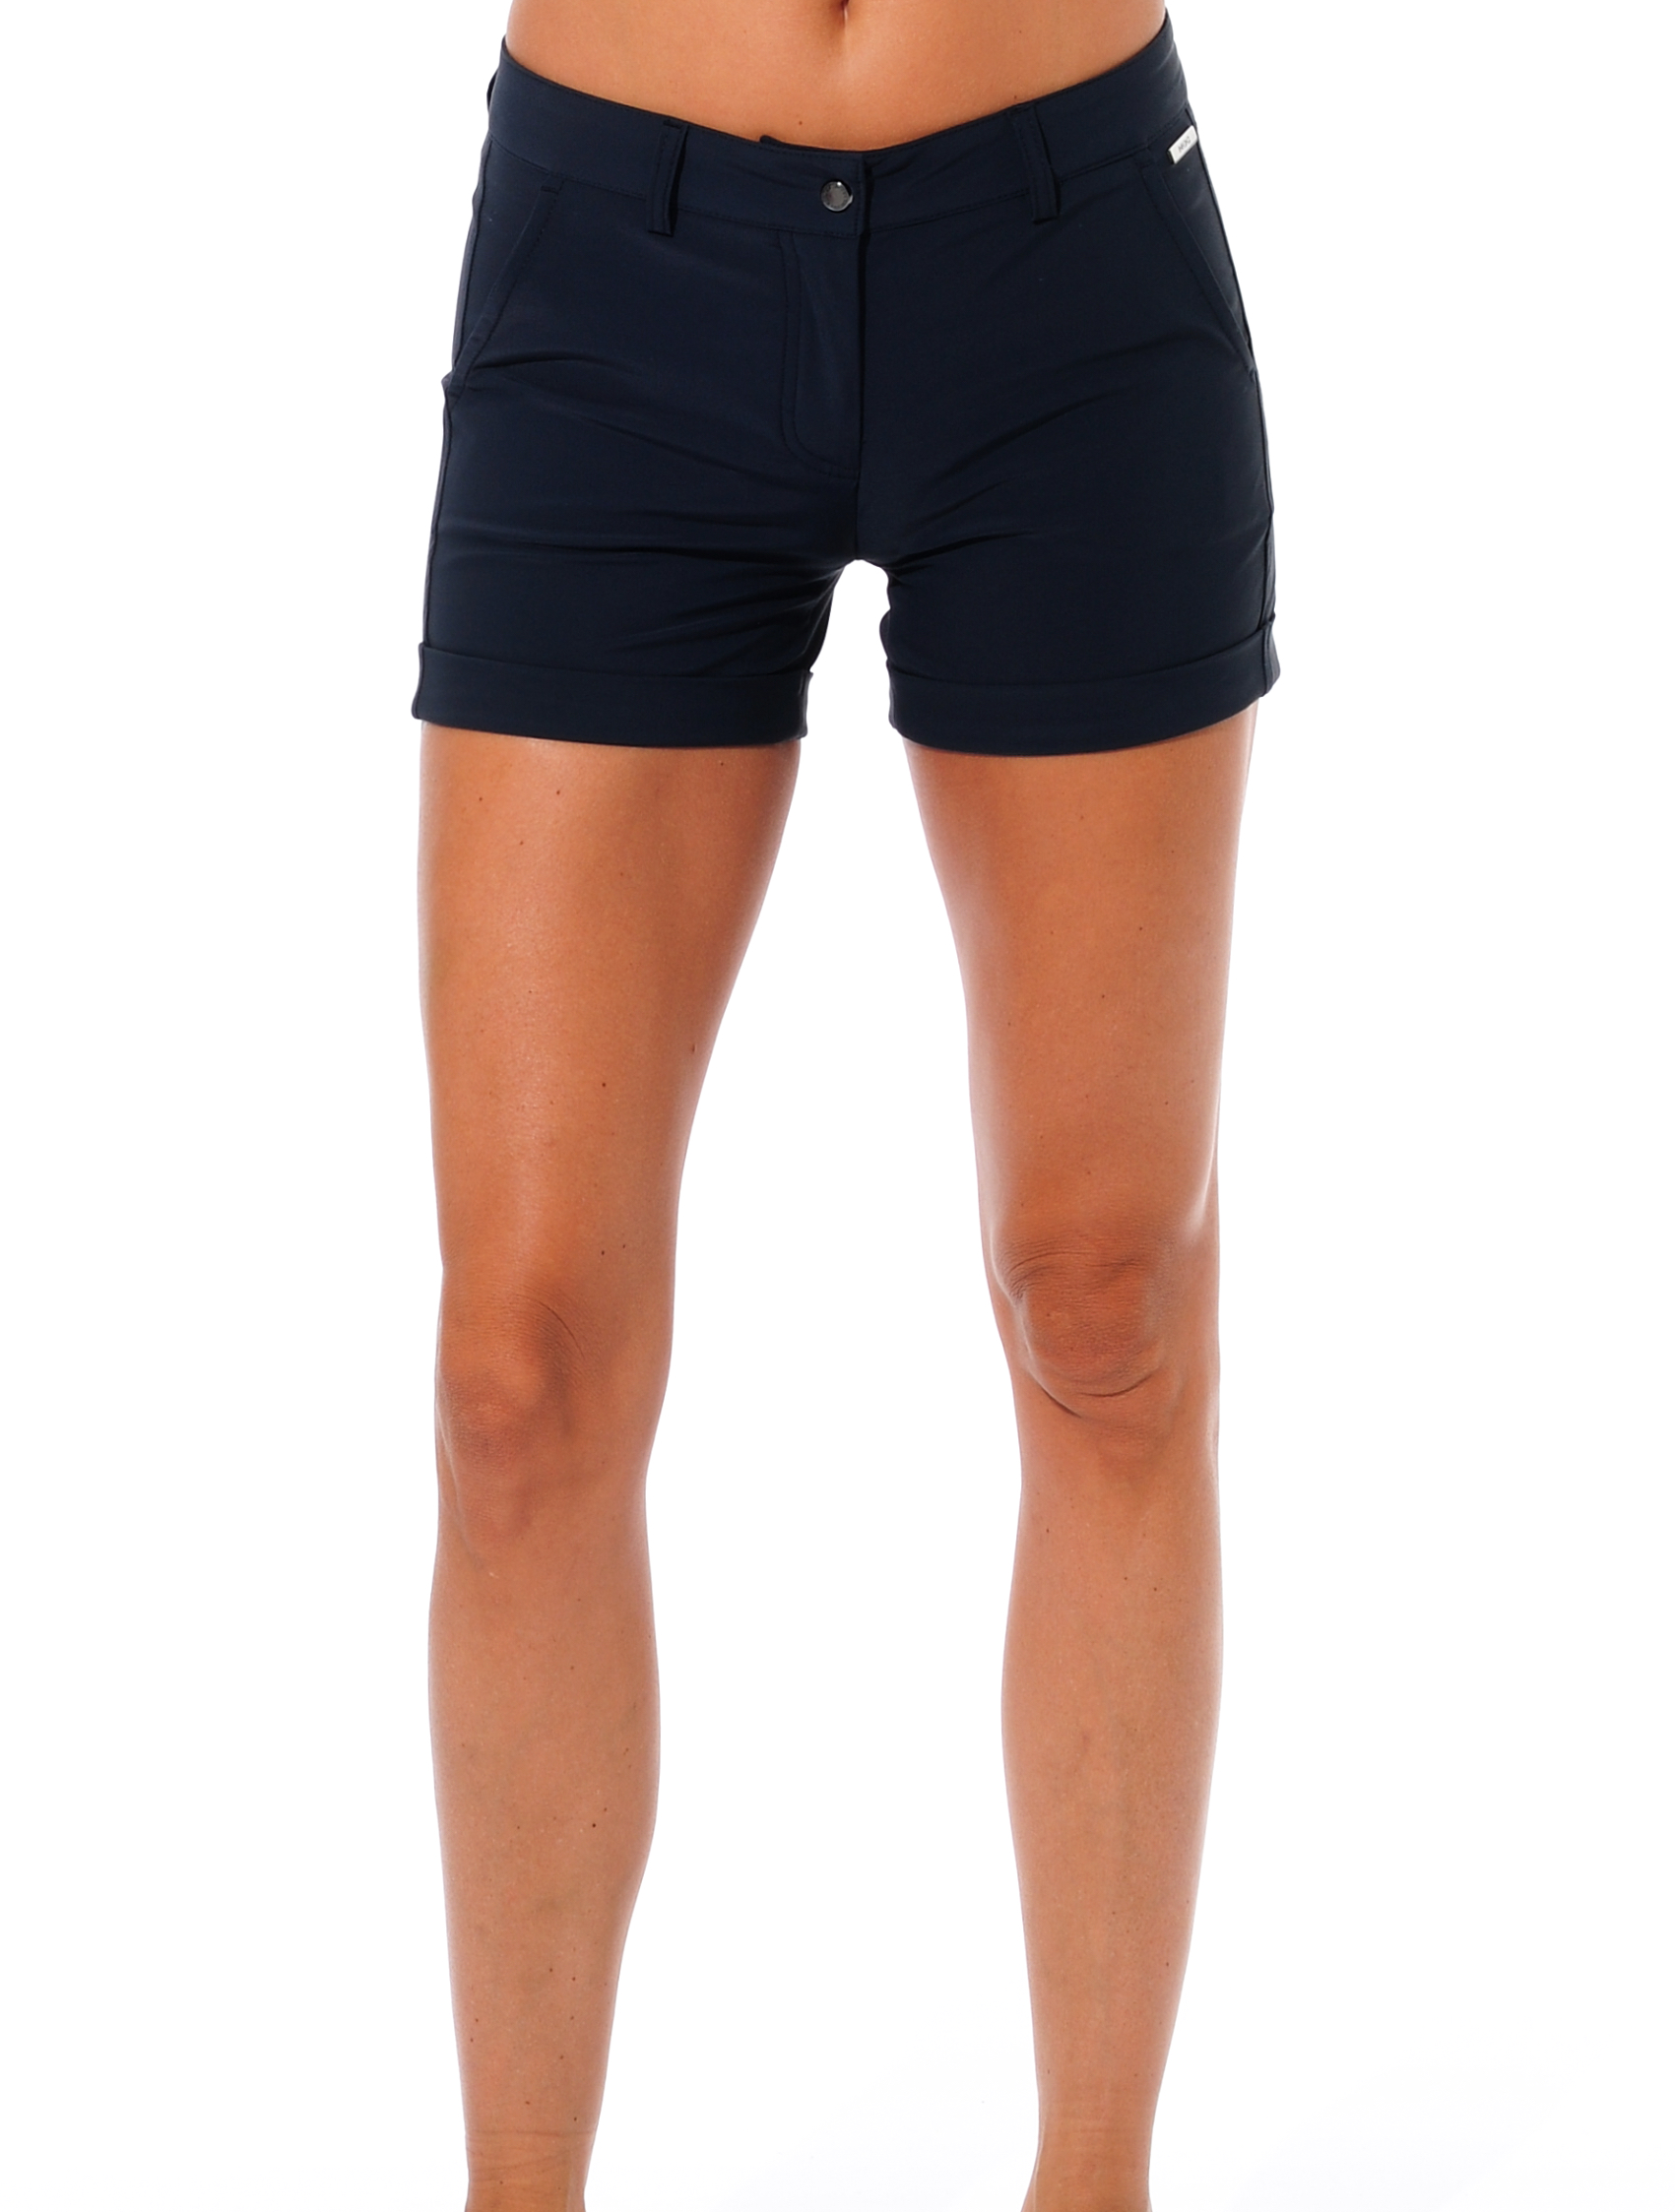 4way stretch short shorts night blue 